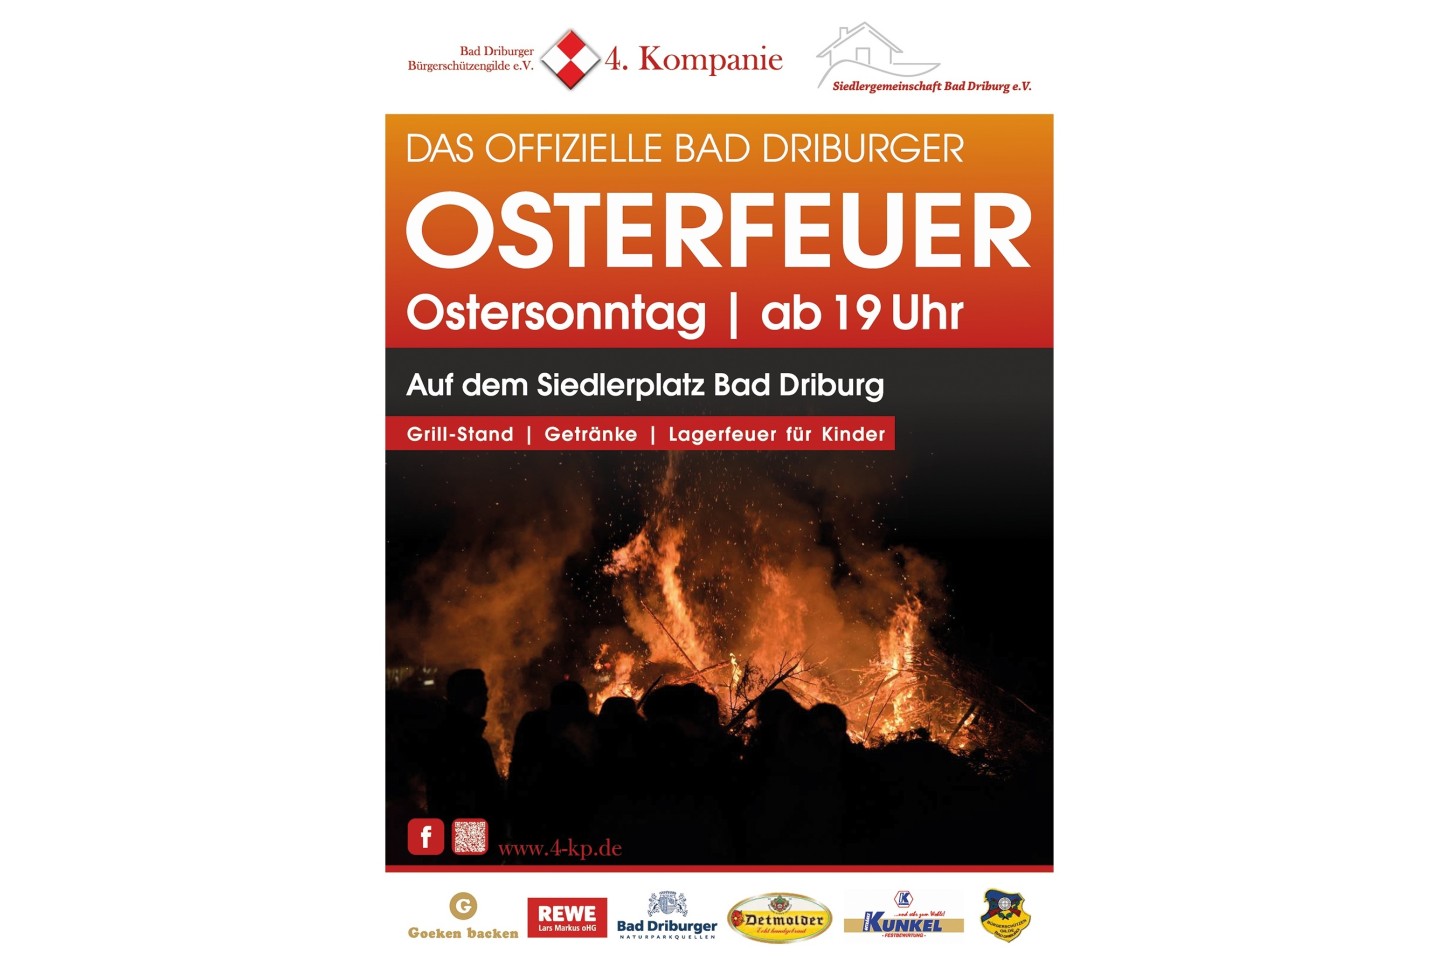 Das offizielle Bad Driburger Osterfeuer